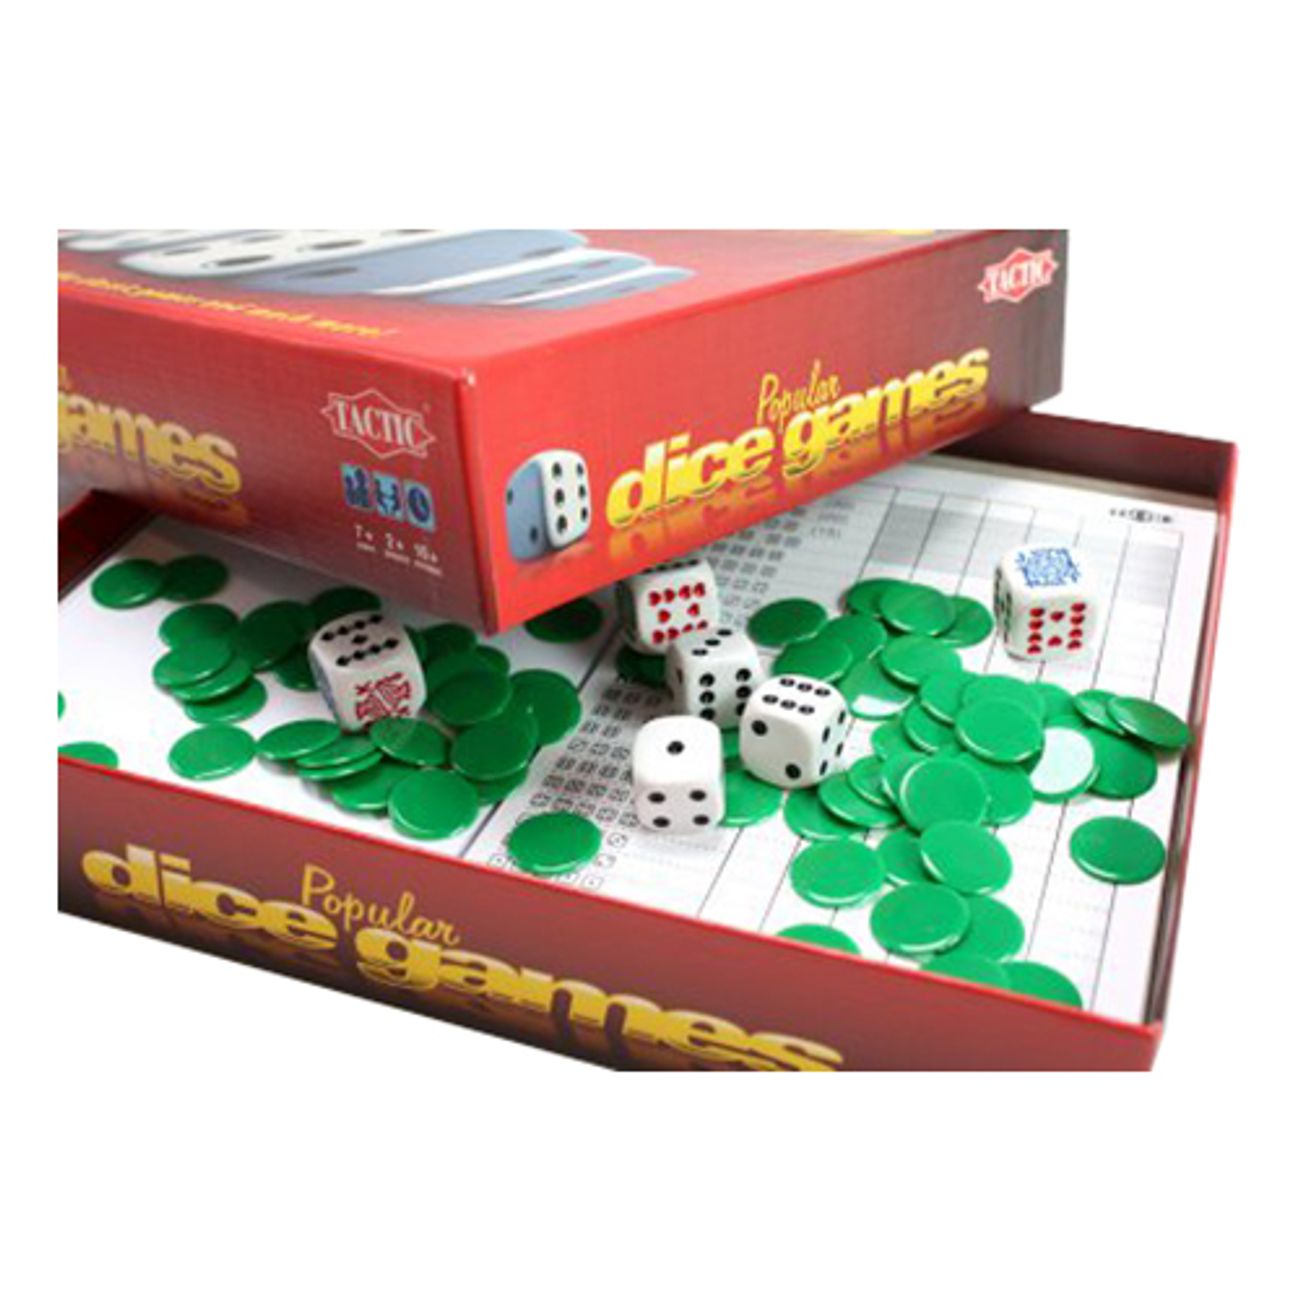 popular-dice-games-spel-2